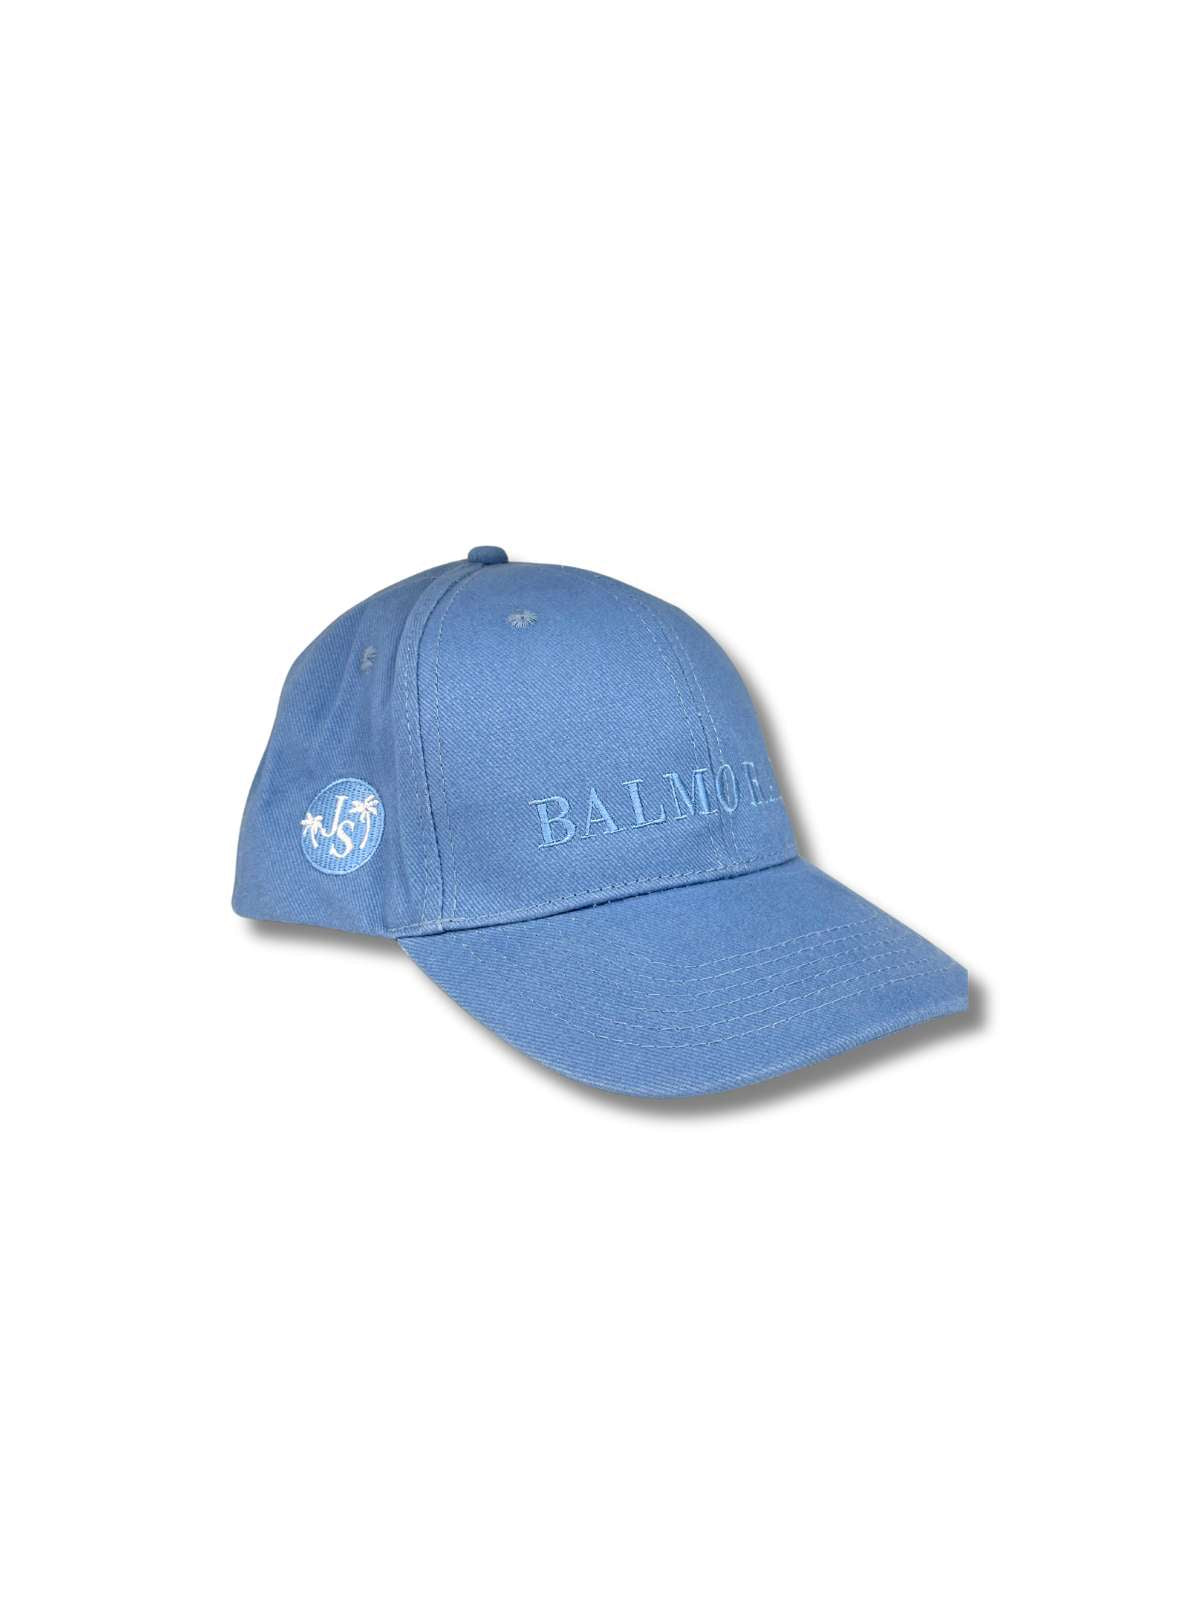 Balmoral Unisex Cotton Cap - Steel Blue